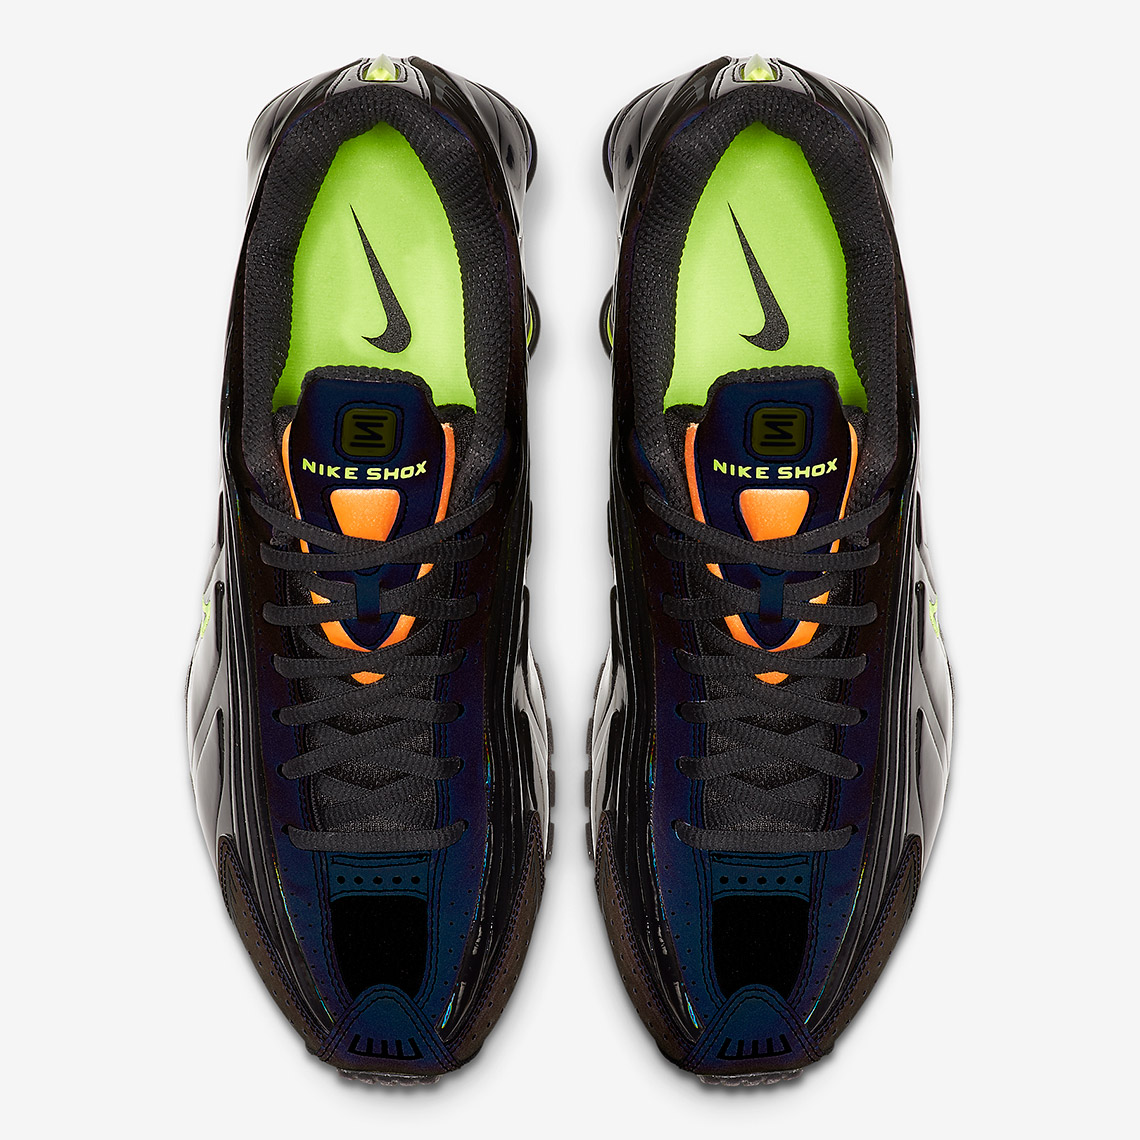 Nike Shox R4 GEL Neon CI1955 074 